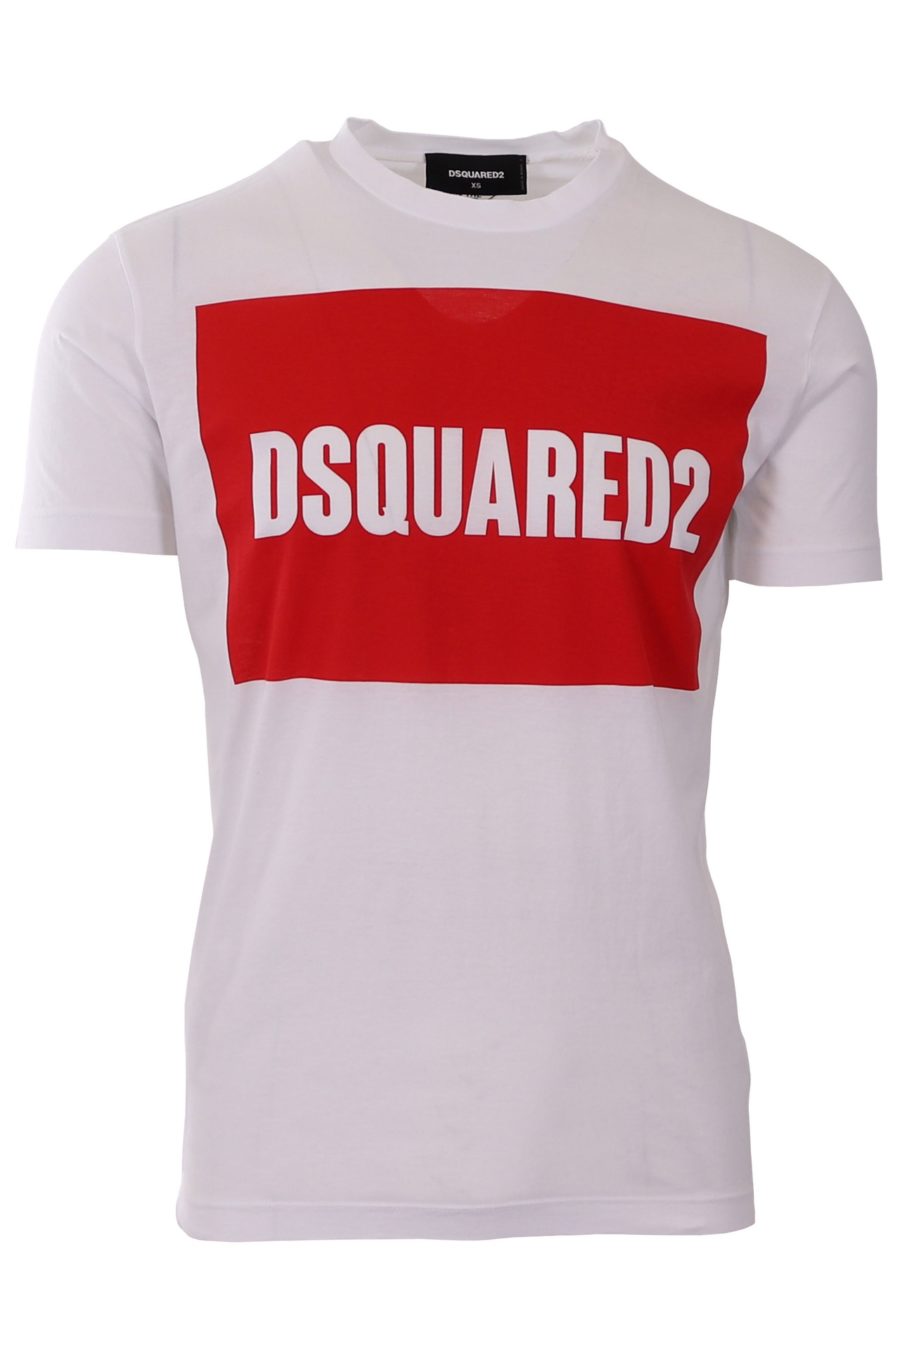 T-shirt Dsquared2 blanc avec logo carré rouge - 8b8b758e6c984718df449714c3f41330288ff87b